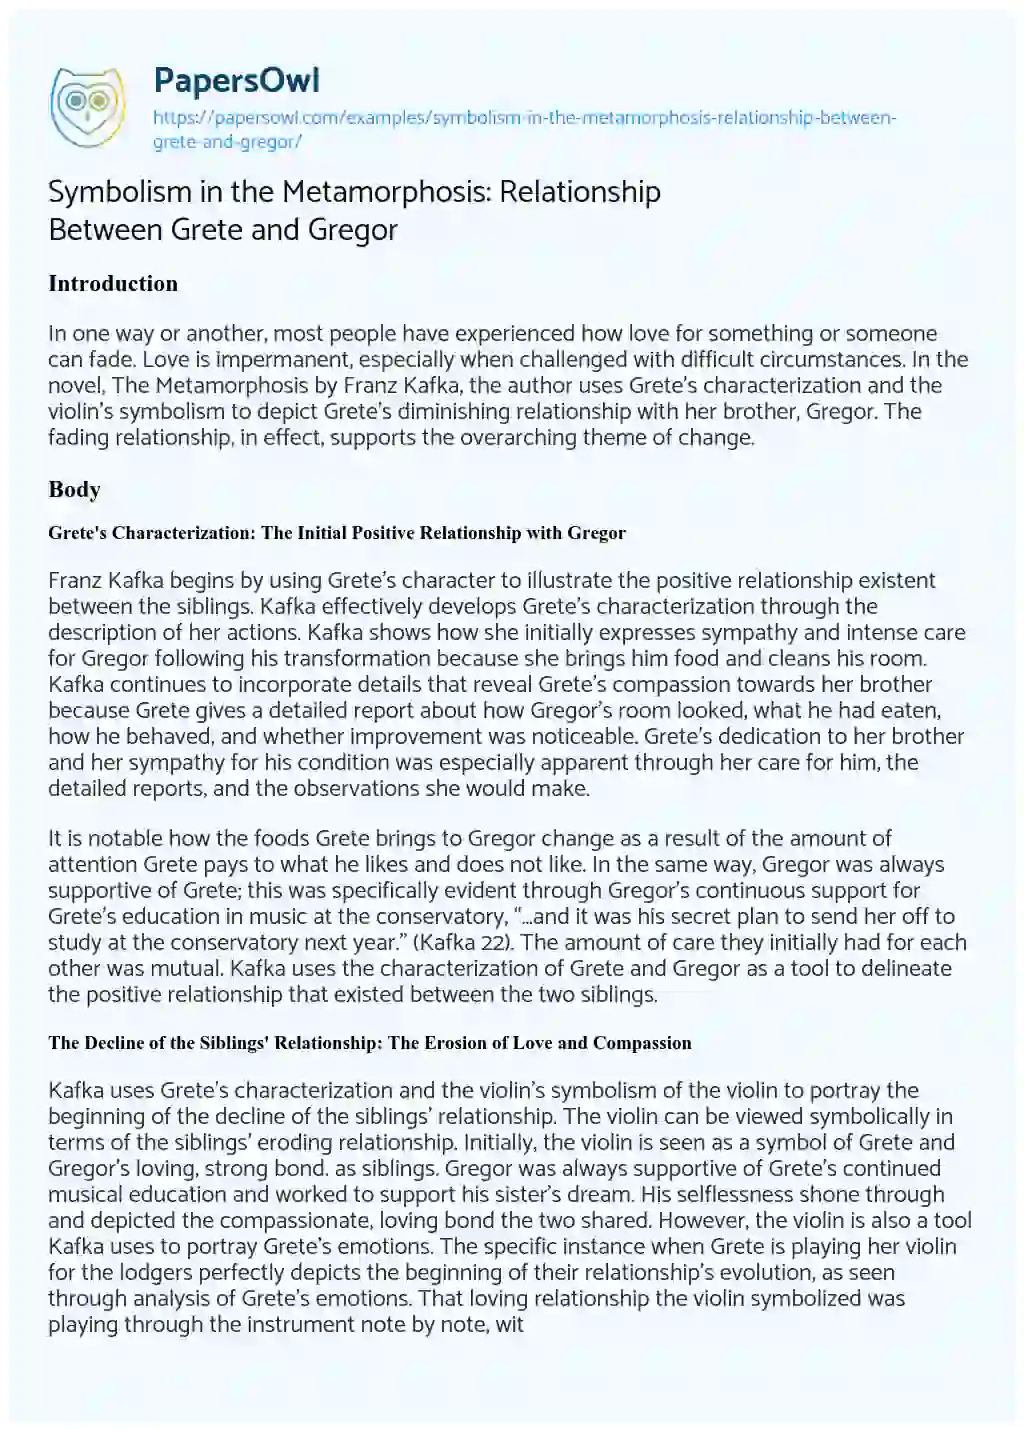 Essay on Symbolism in the Metamorphosis: Relationship between Grete and Gregor